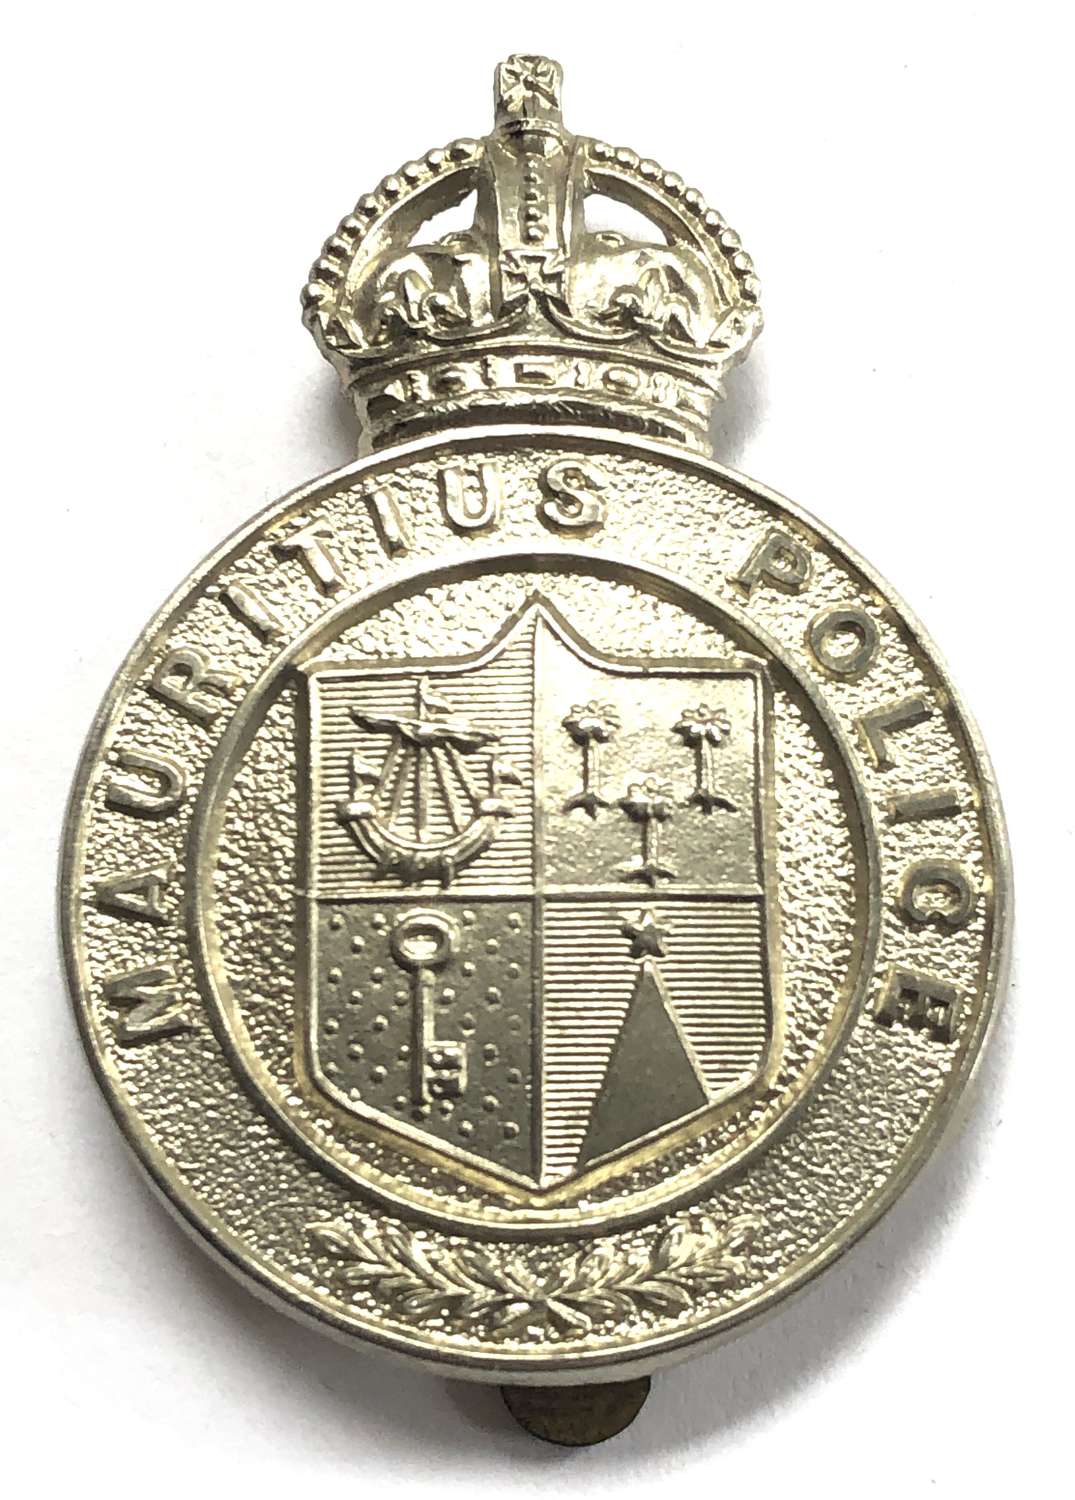 Mauritius Police pre 1953 cap badge by Firmin, London